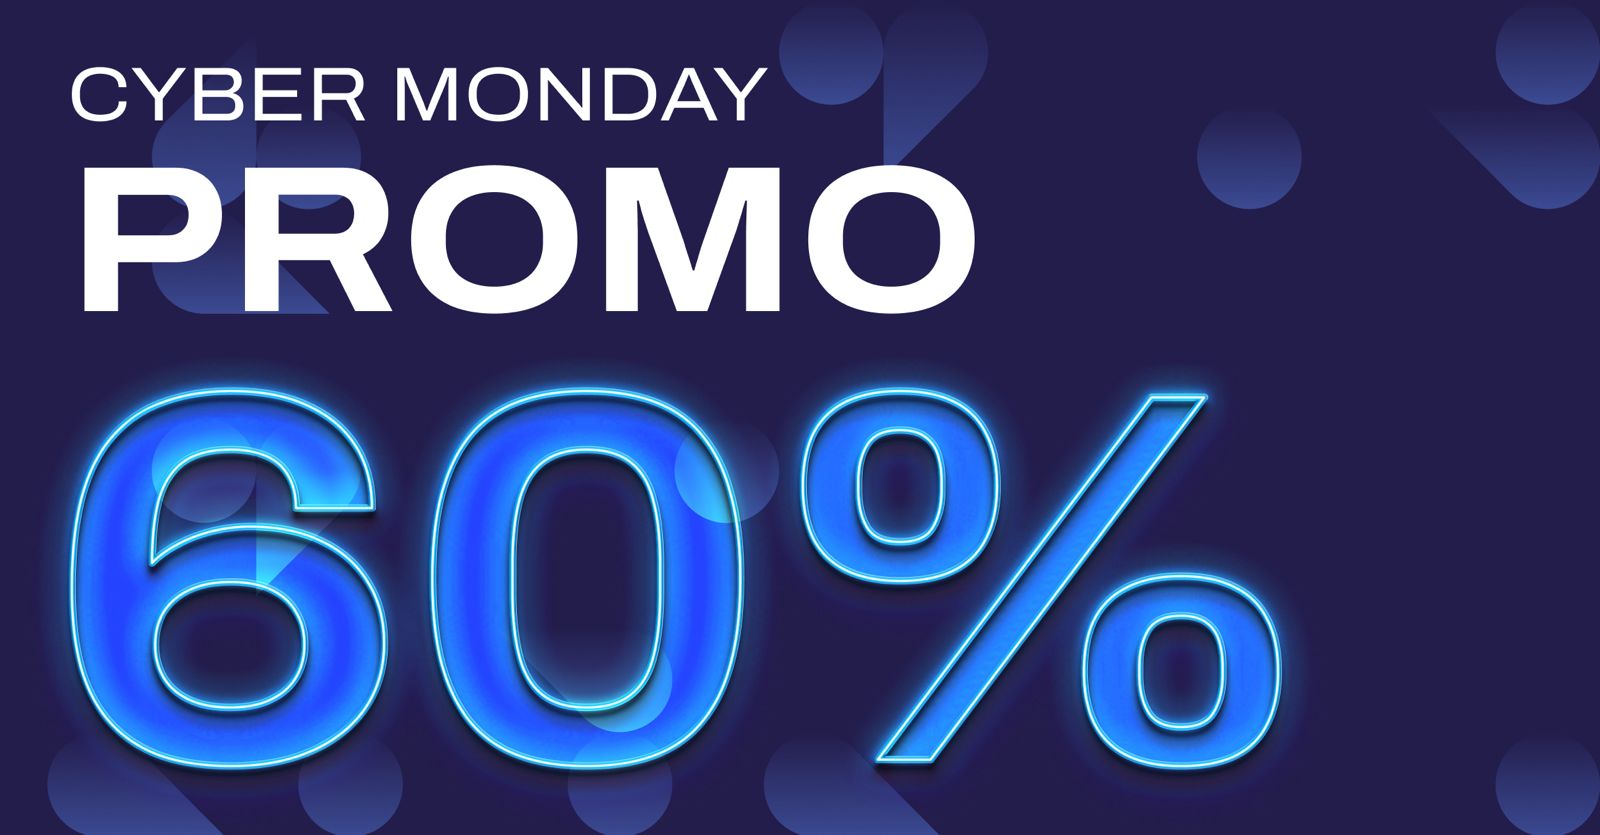 Cyber Monday Promo 60%